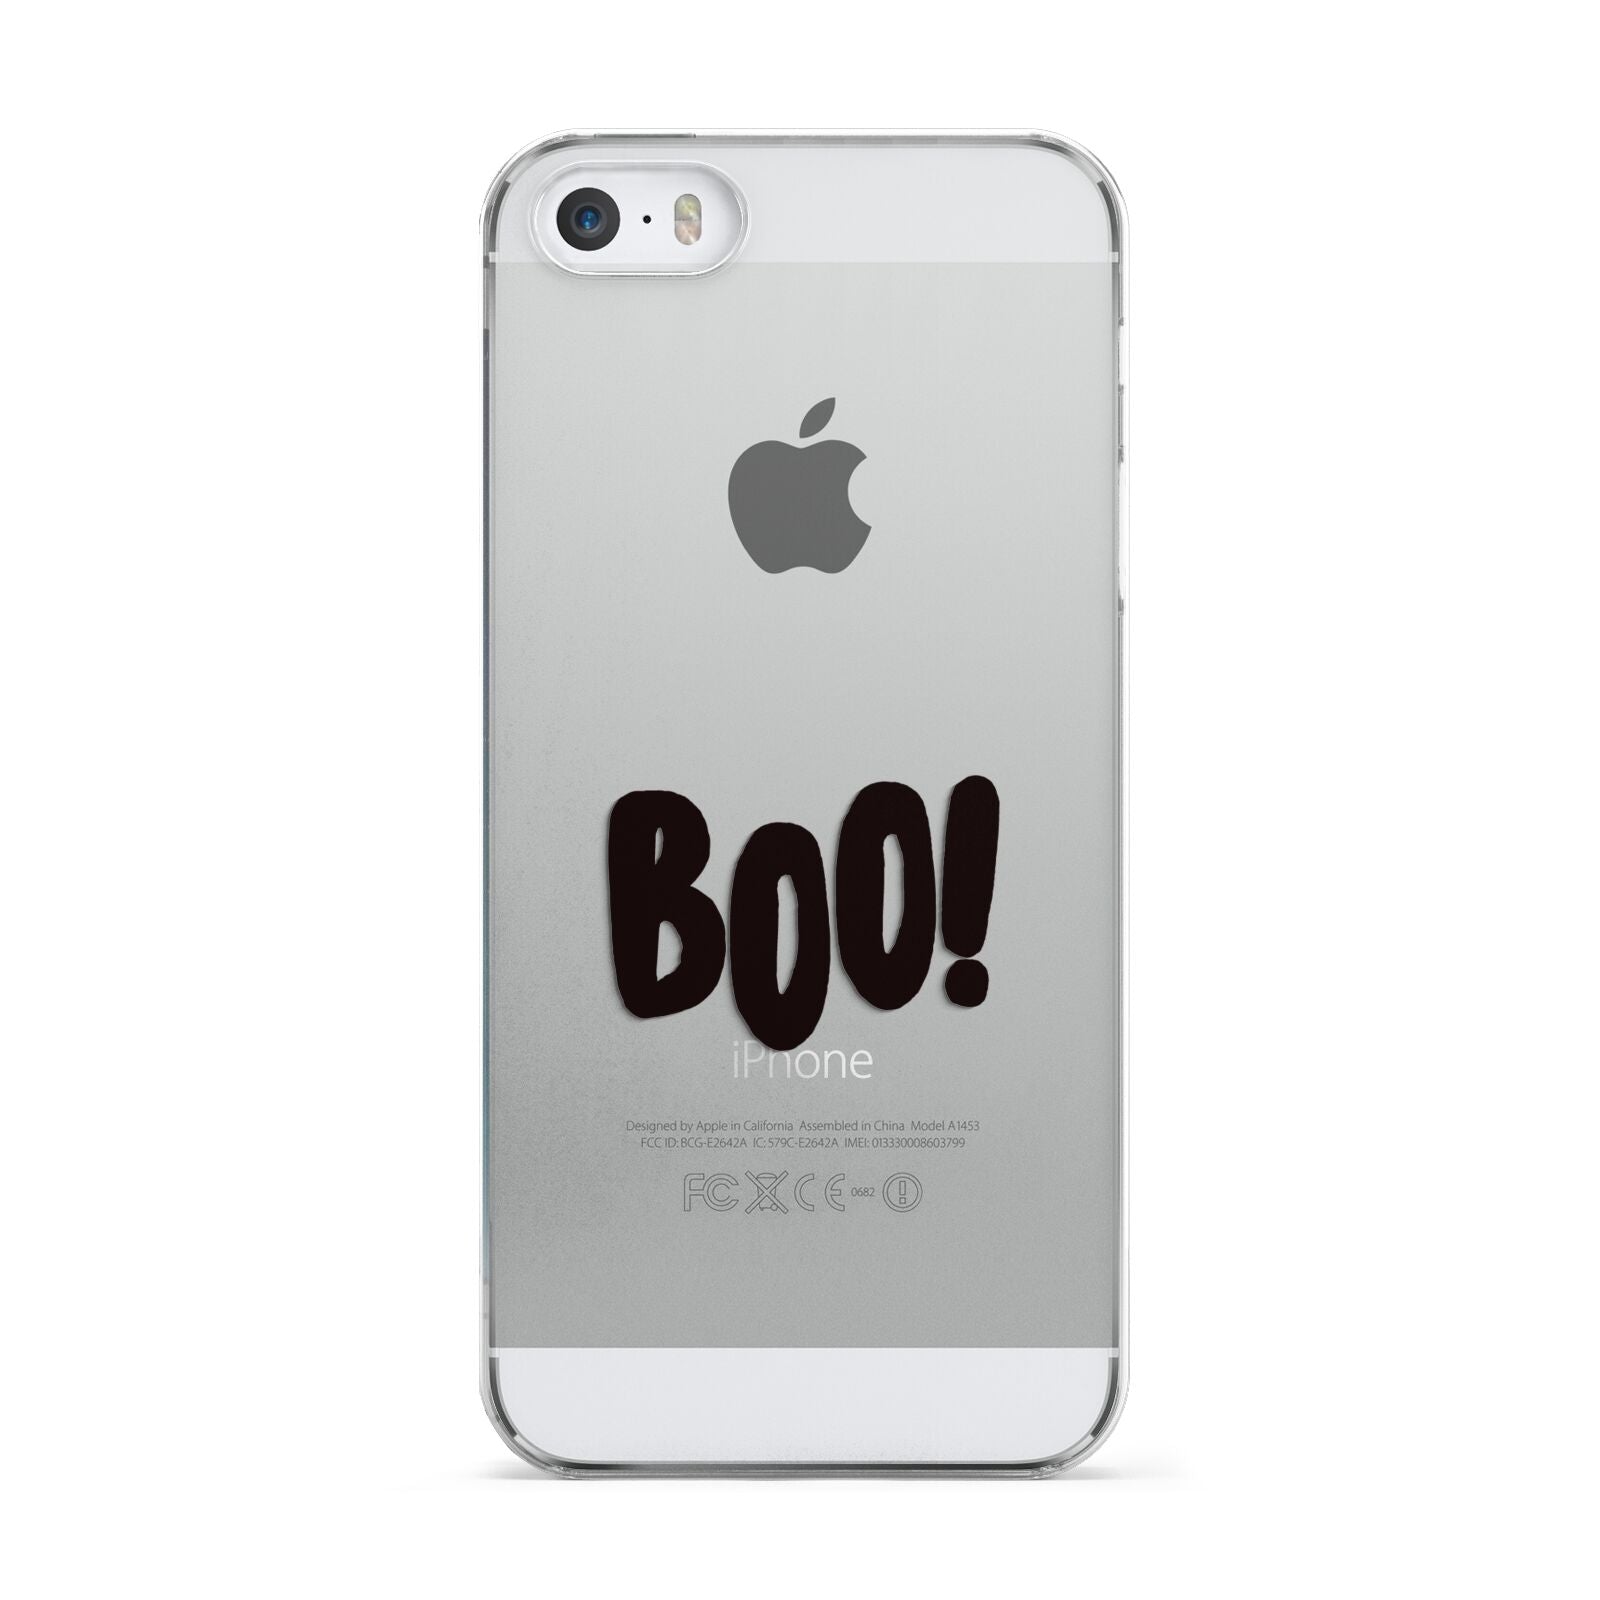 Boo Black Apple iPhone 5 Case